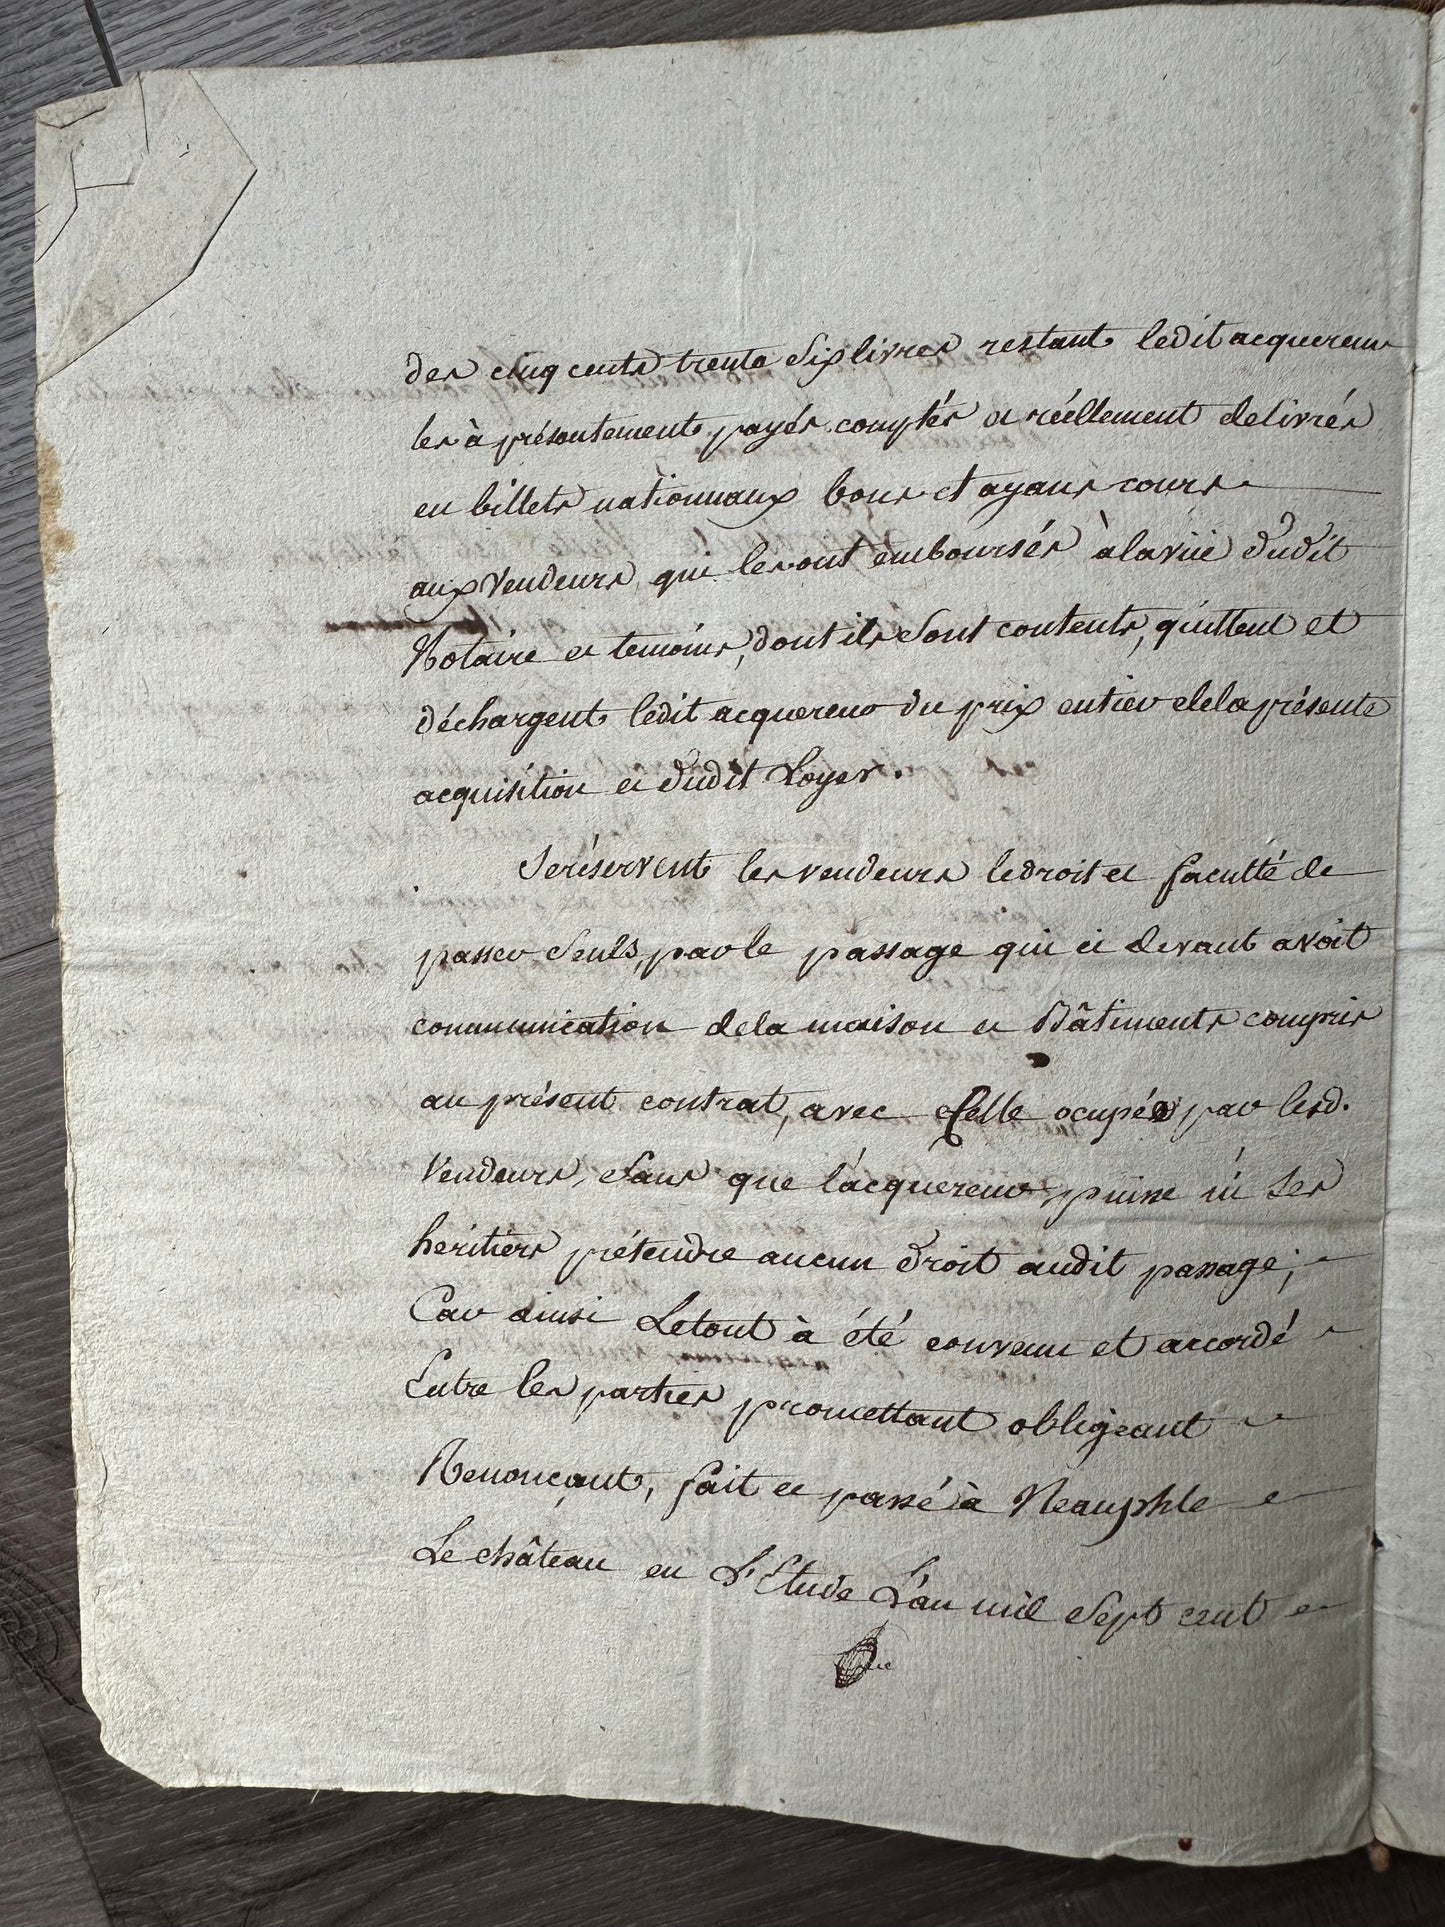 1793 French Legal Manuscript